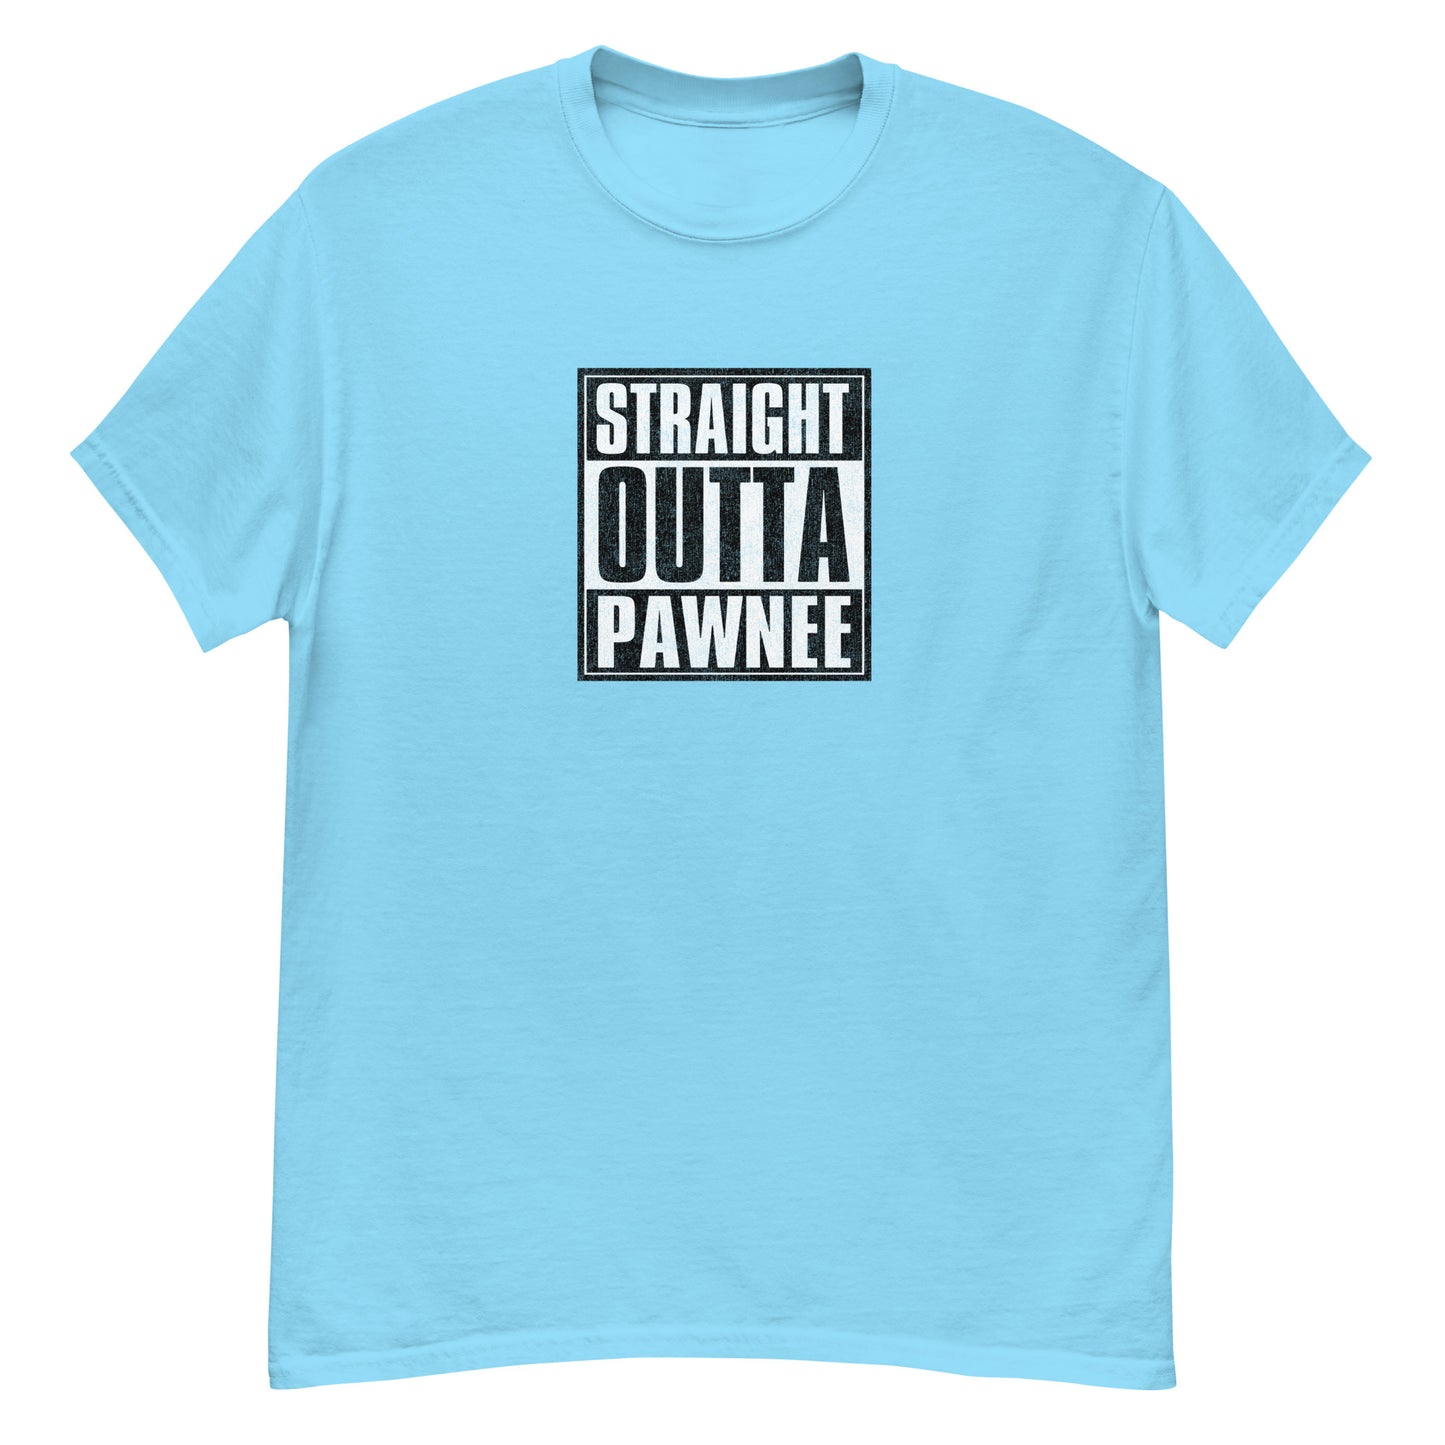 Straight Outta Pawnee classic tee